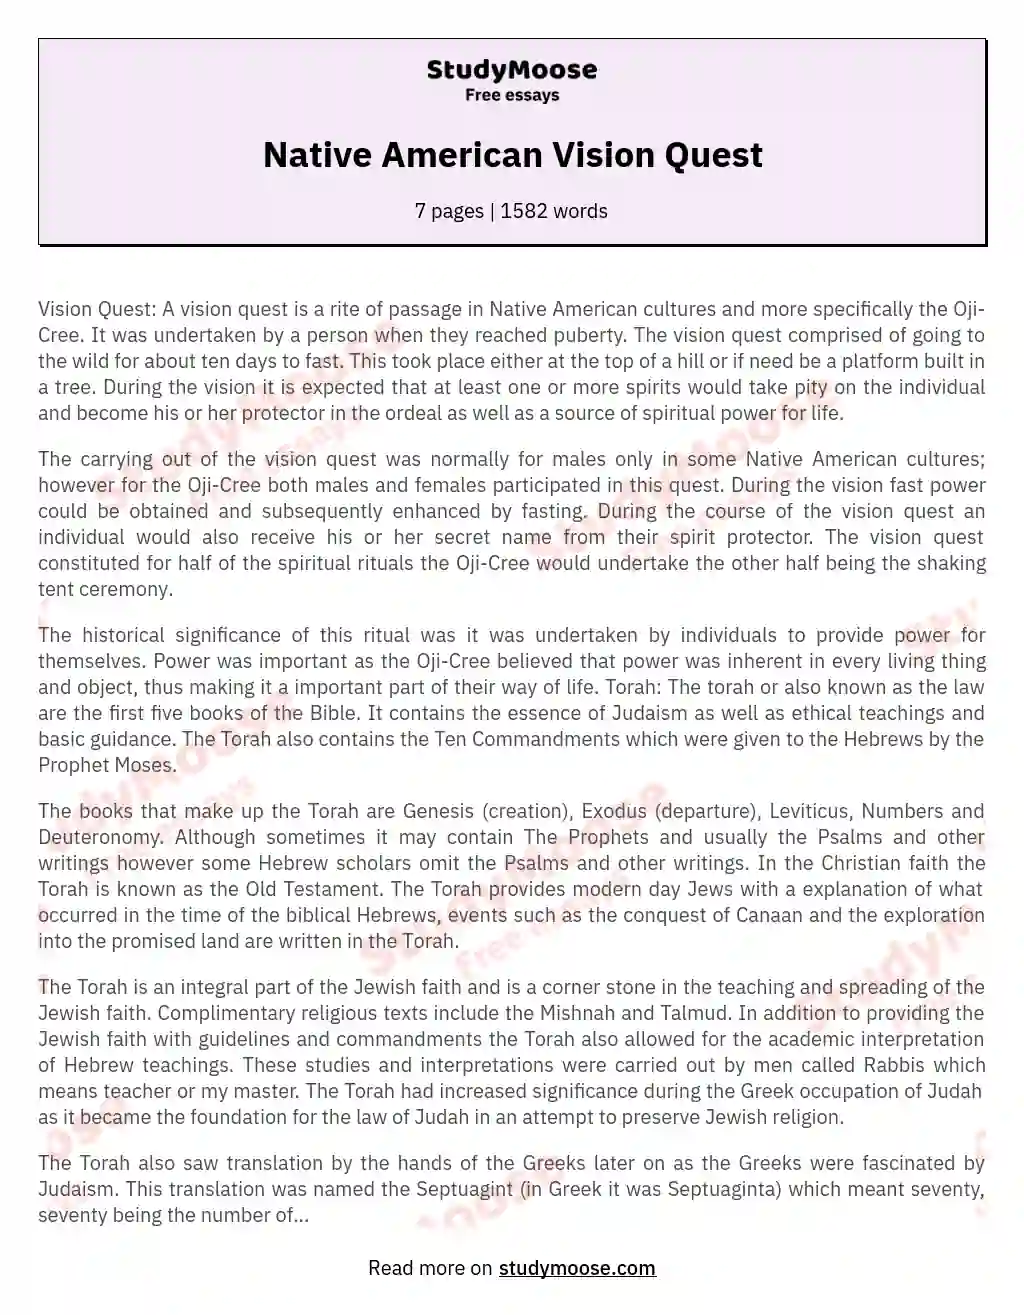 Native American Vision Quest essay